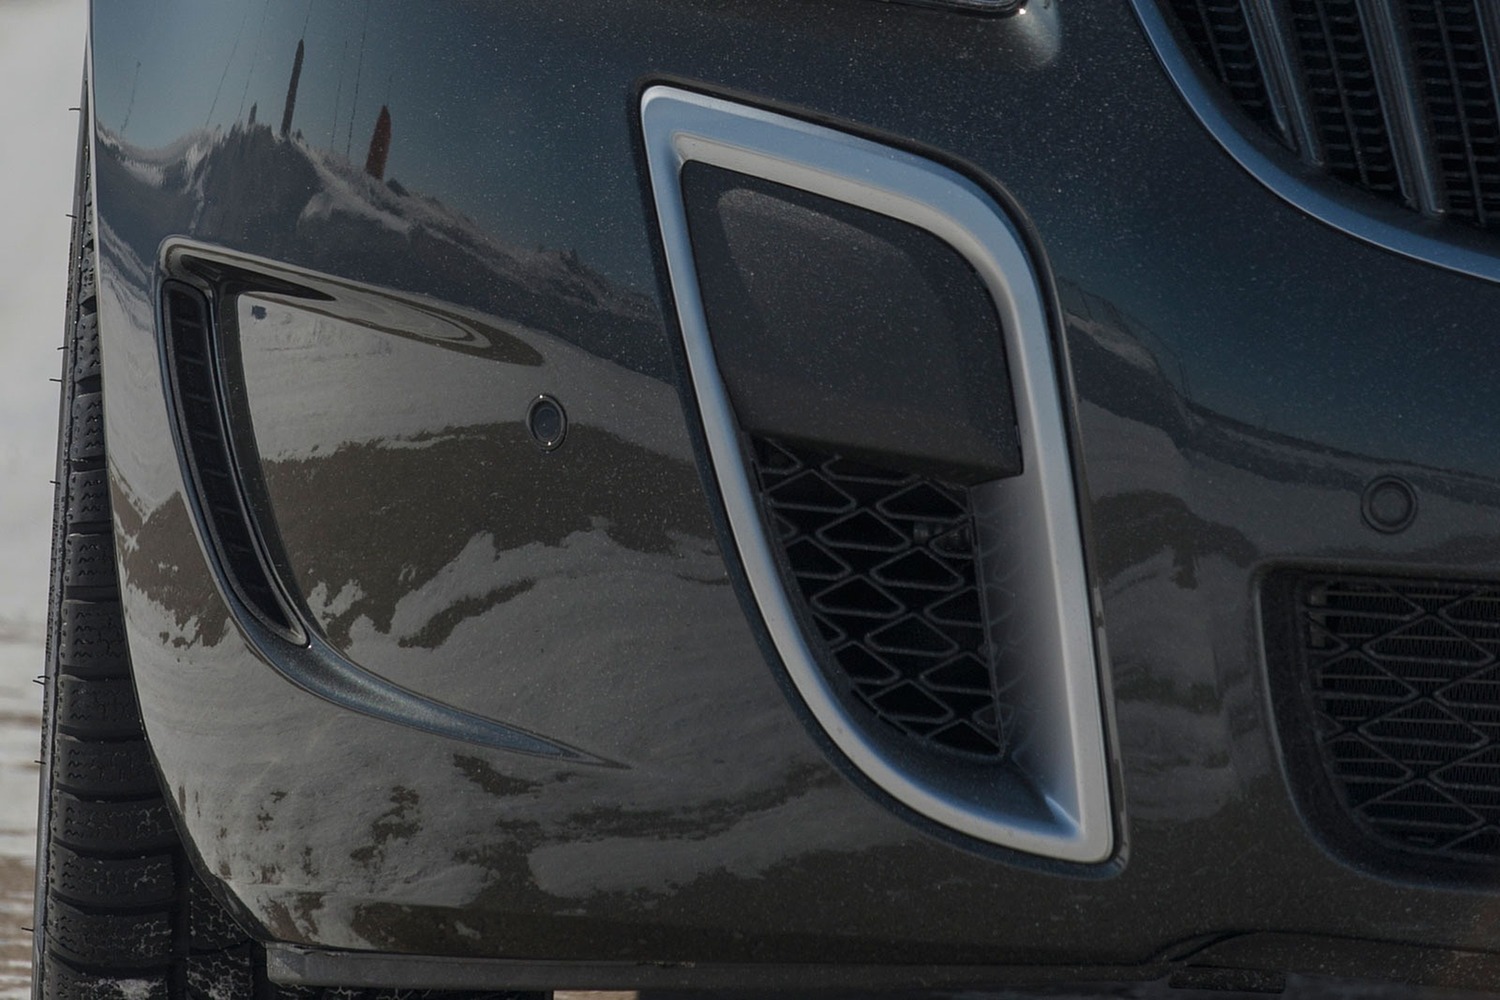 Buick Regal GS Sedan Exterior Detail (2015 model year shown)